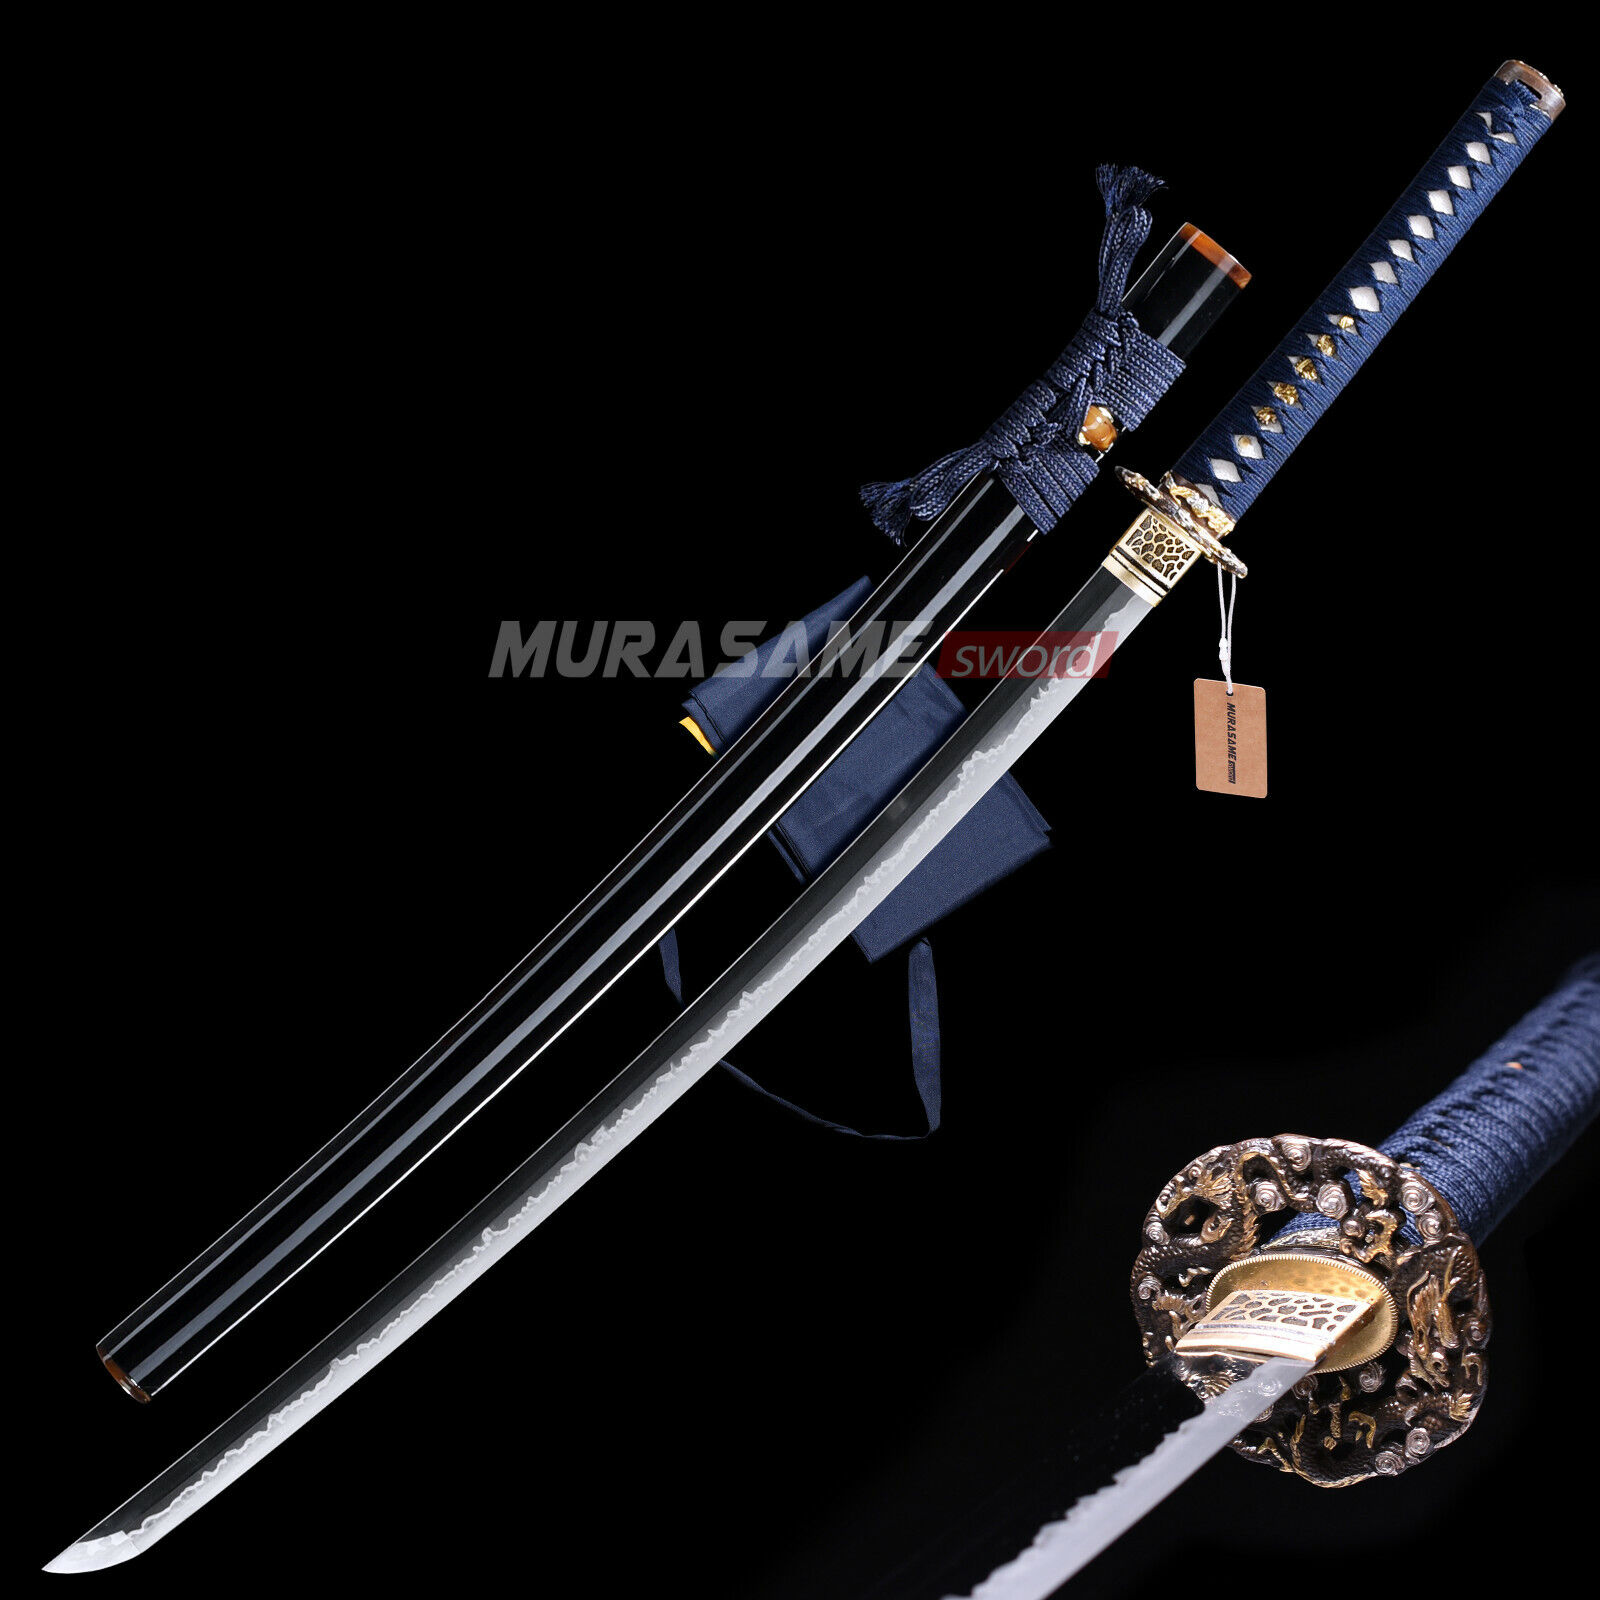 Top Quality Katana Real Sword Clay Tempered L6 Steel Choji Hamon Razor Sharp